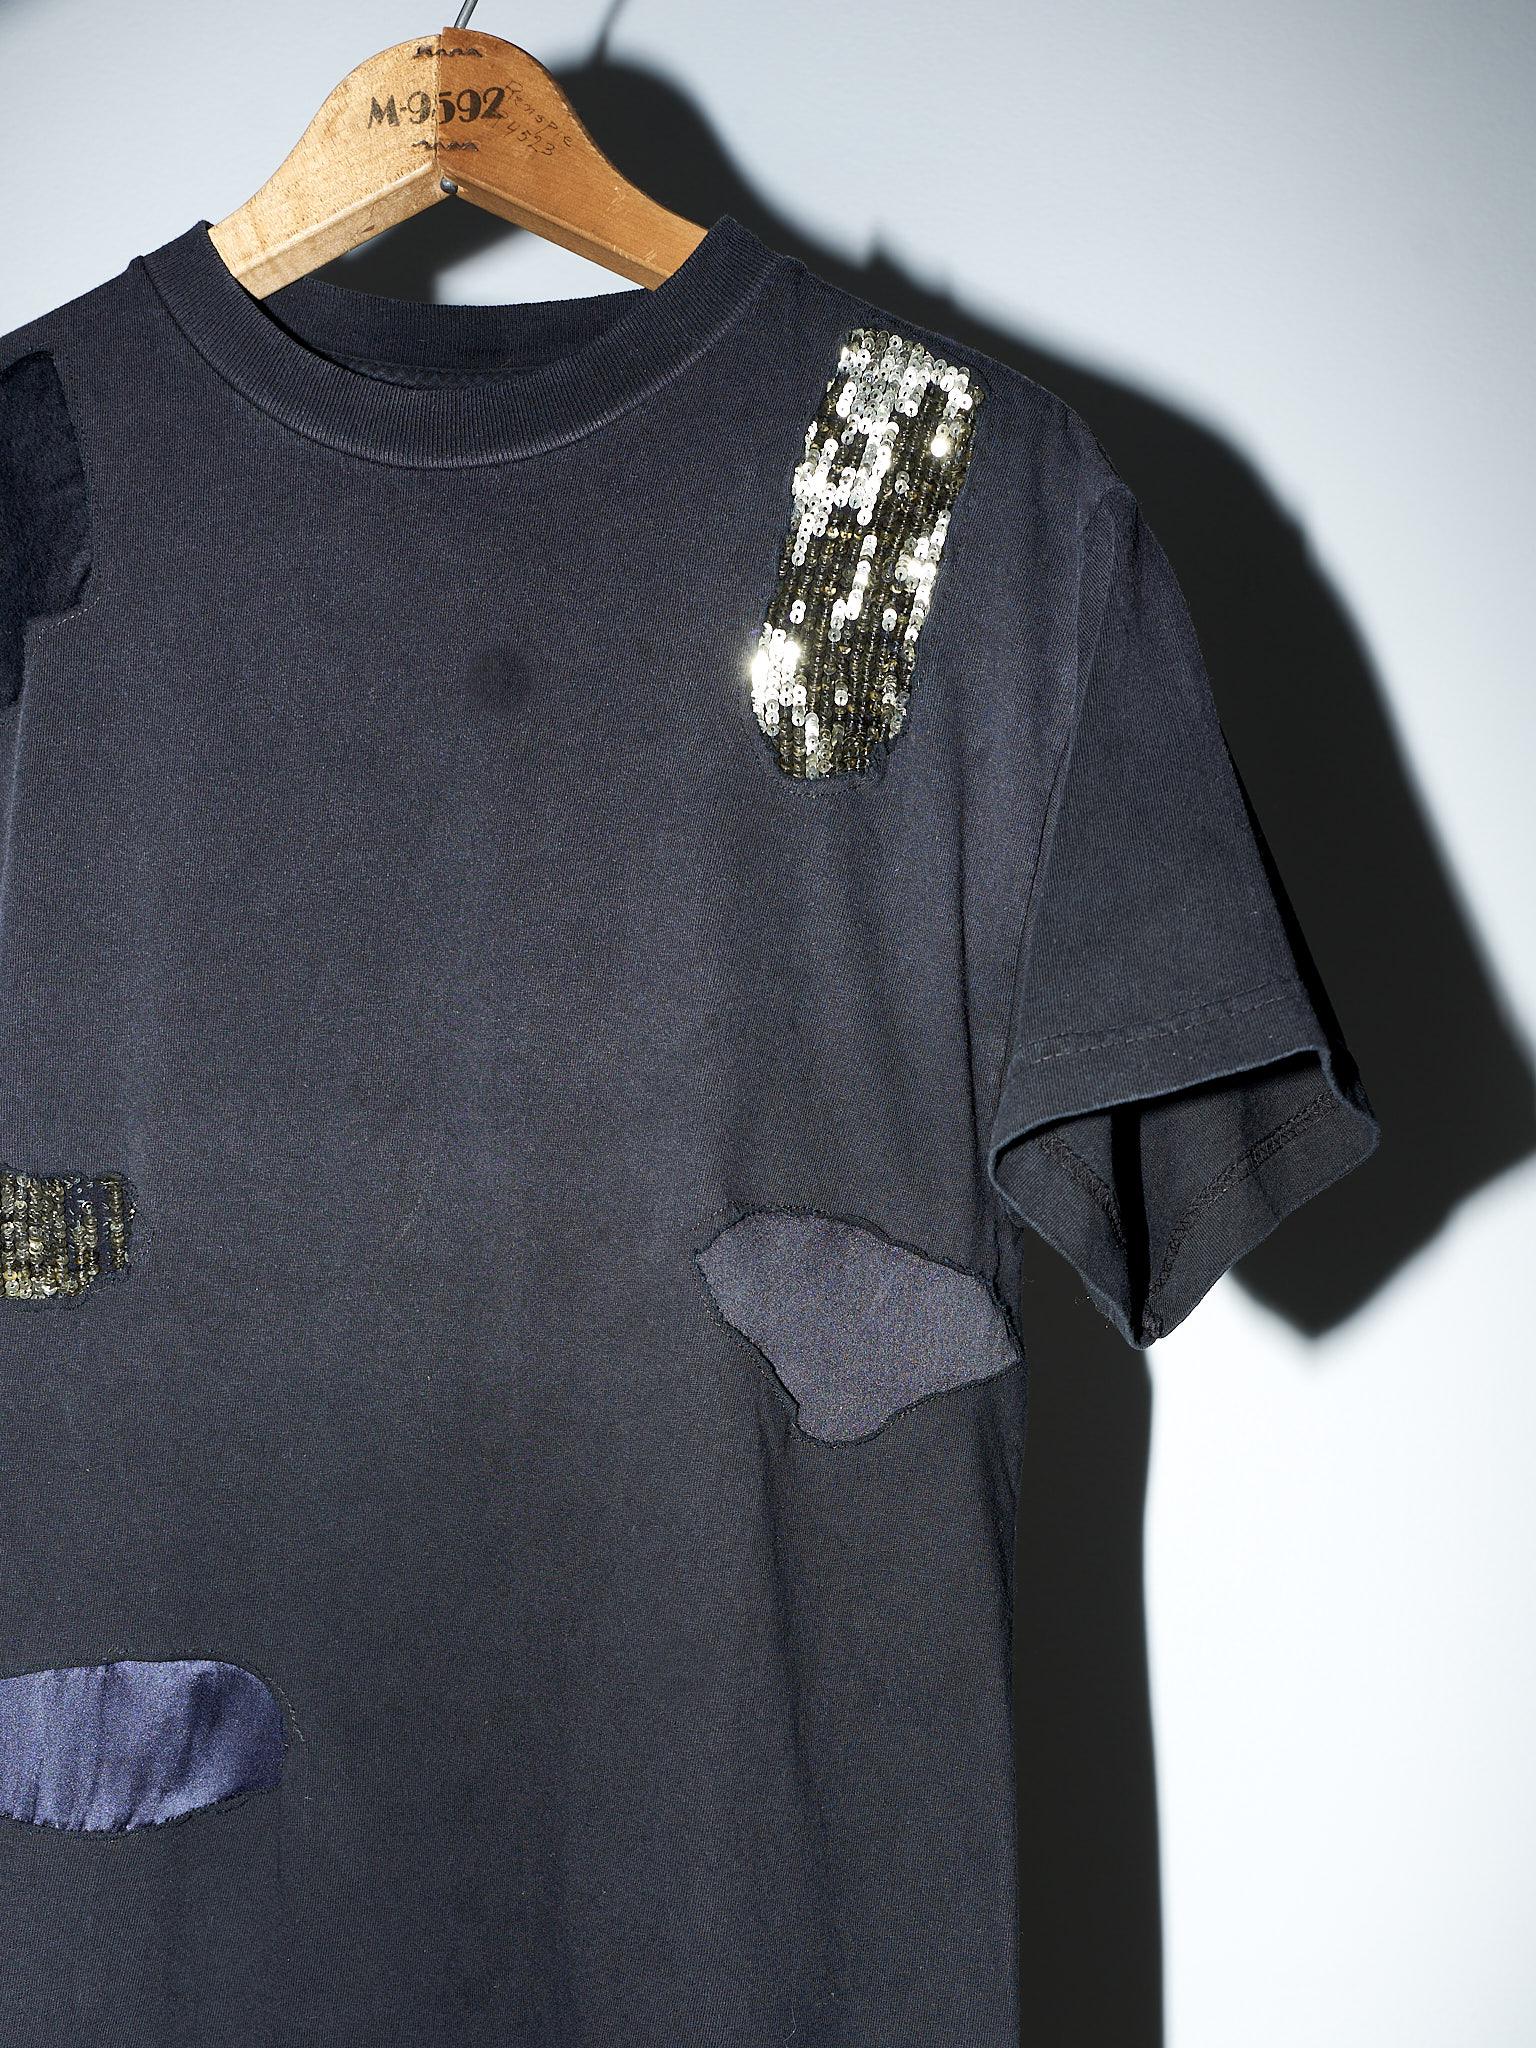 J Dauphin Black T-Shirt Embellished  Patch Work Sequin Silk Body Cotton  10